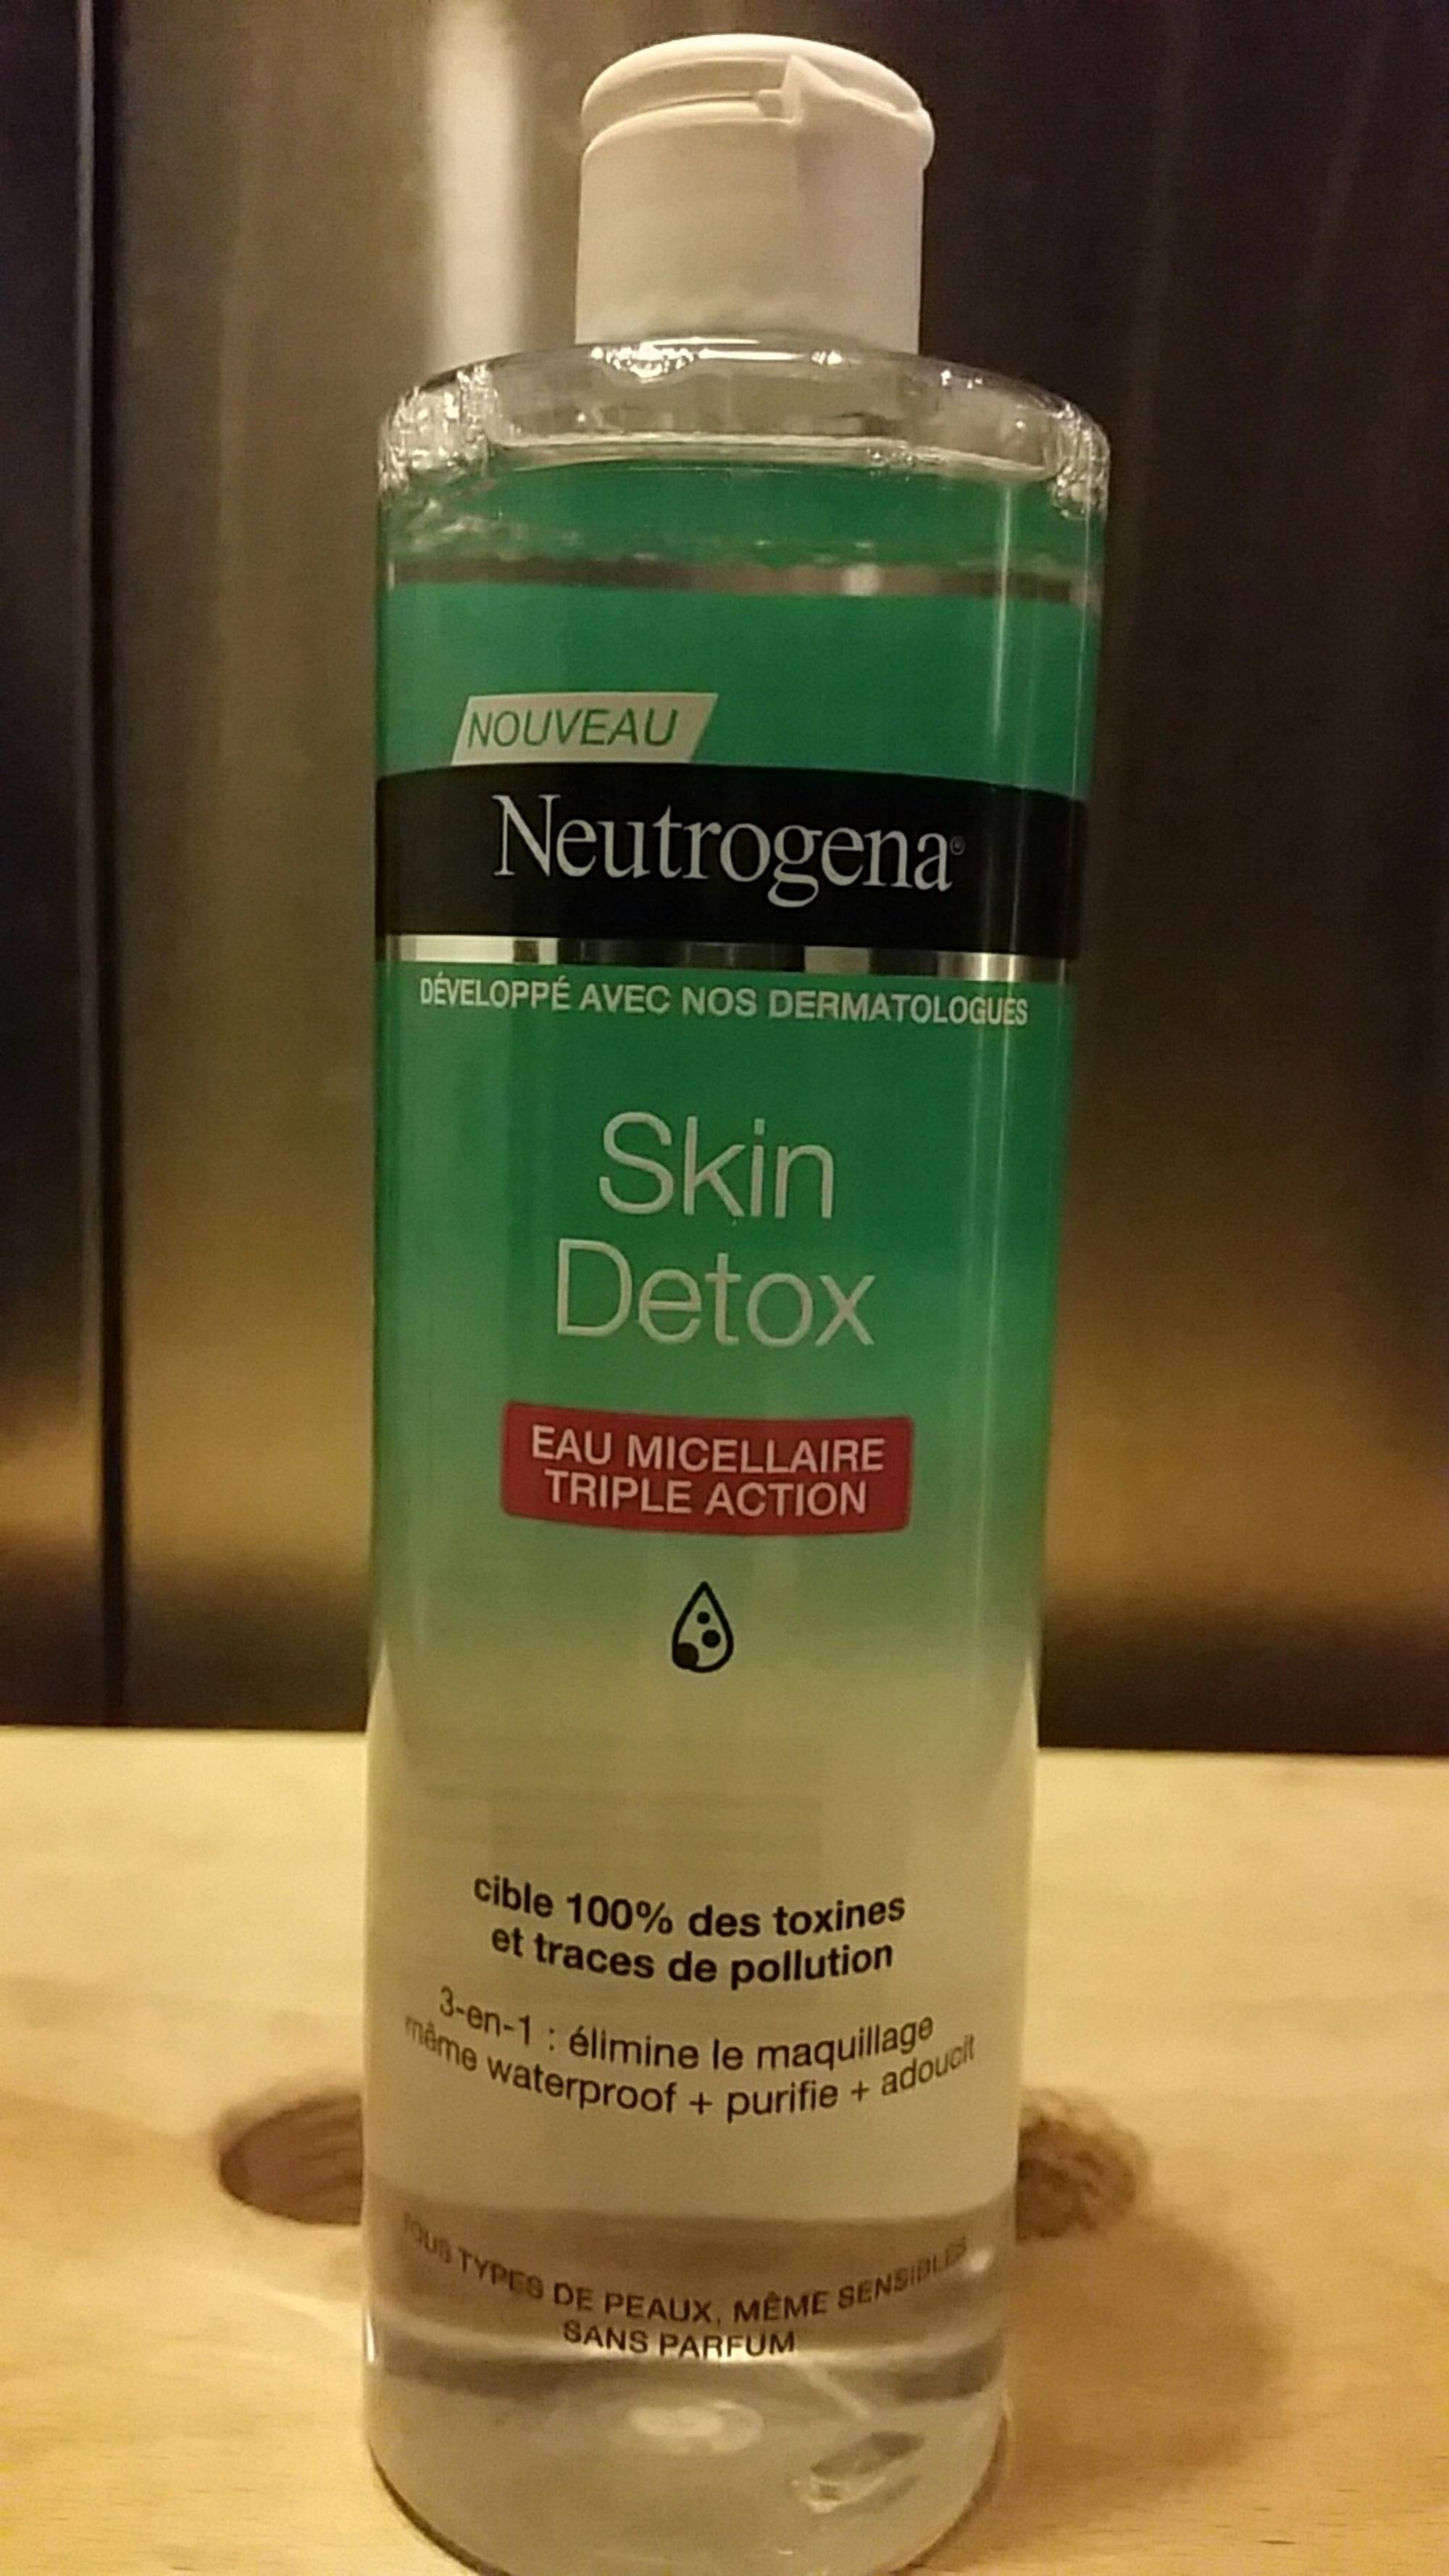 NEUTROGENA - Skin detox - Eau micellaire triple action 3 en 1